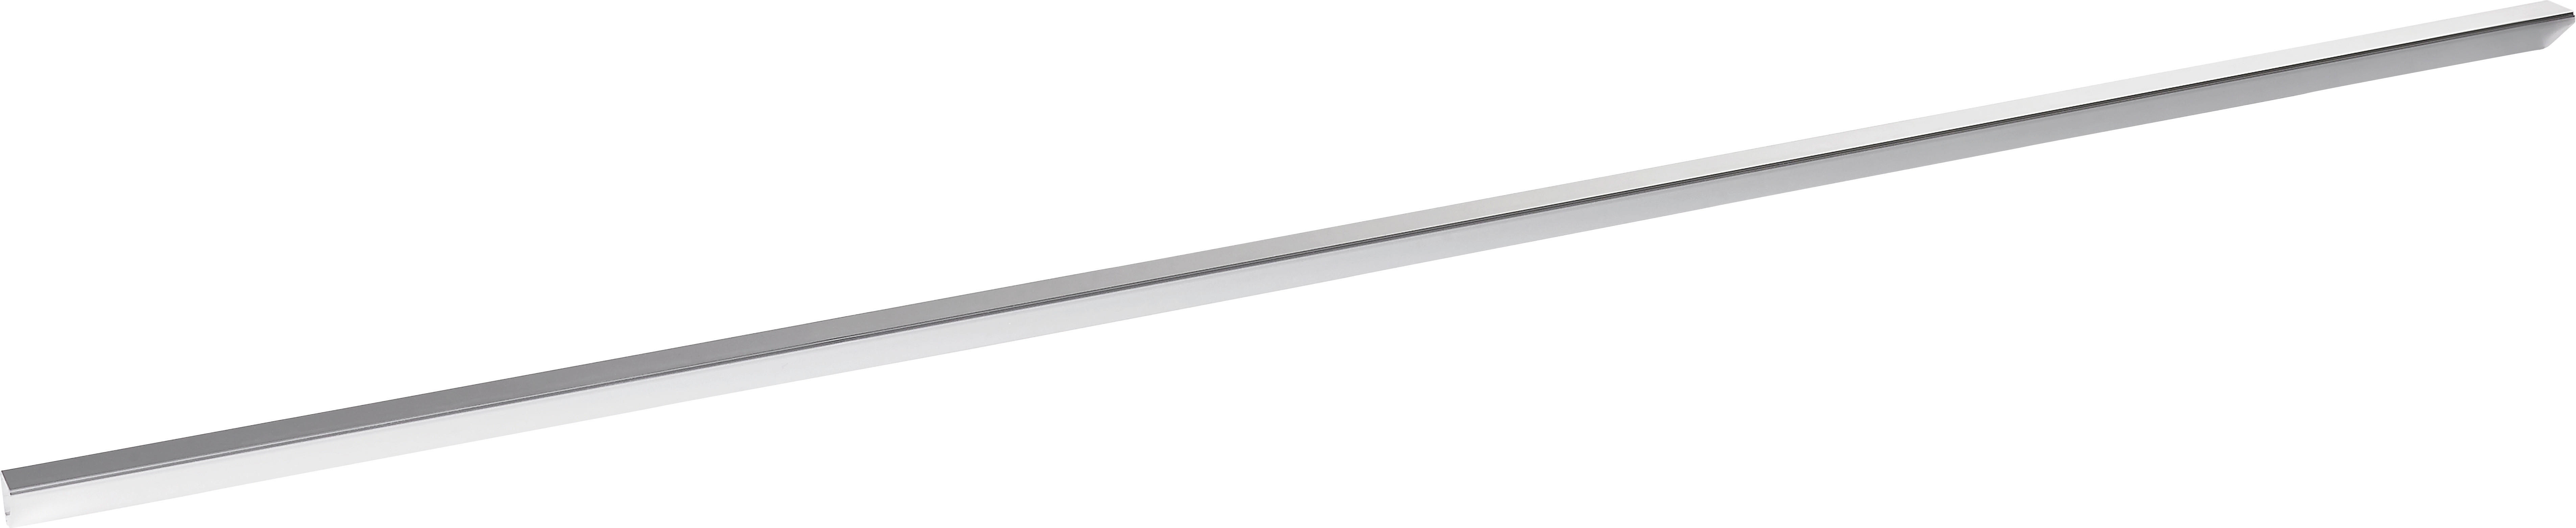 LED-DEKOLEUCHTE Delta Profil 100/2/2 cm   - Transparent/Alufarben, Basics, Kunststoff/Metall (100/2/2cm) - Paulmann